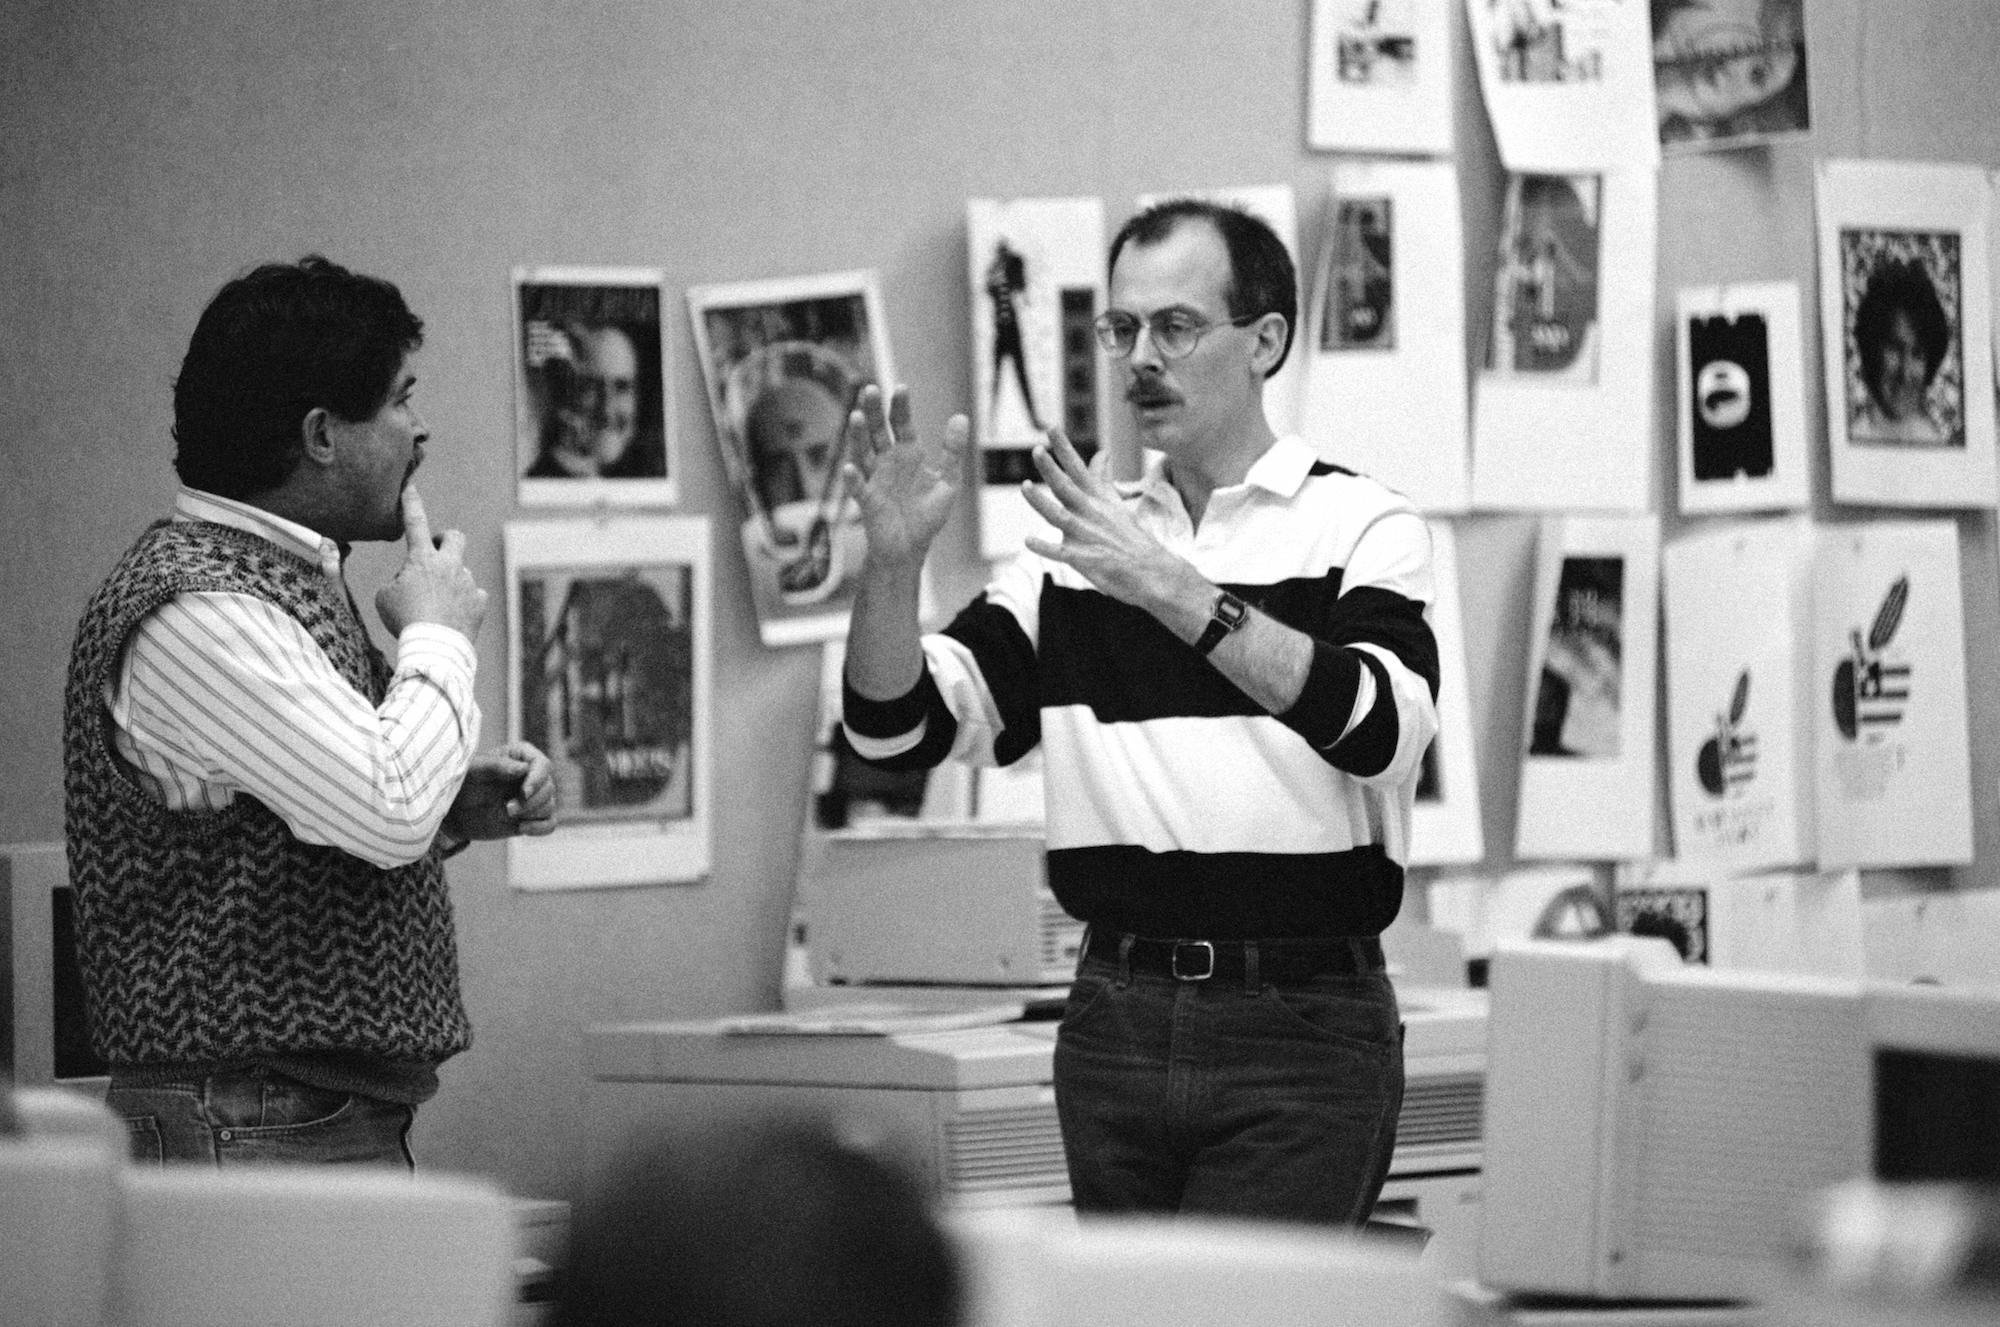 Russell Brown, Adobe Creative Director, March 1991 Программе Photoshop исполнилось 25 лет - увлекательная ретроспектива